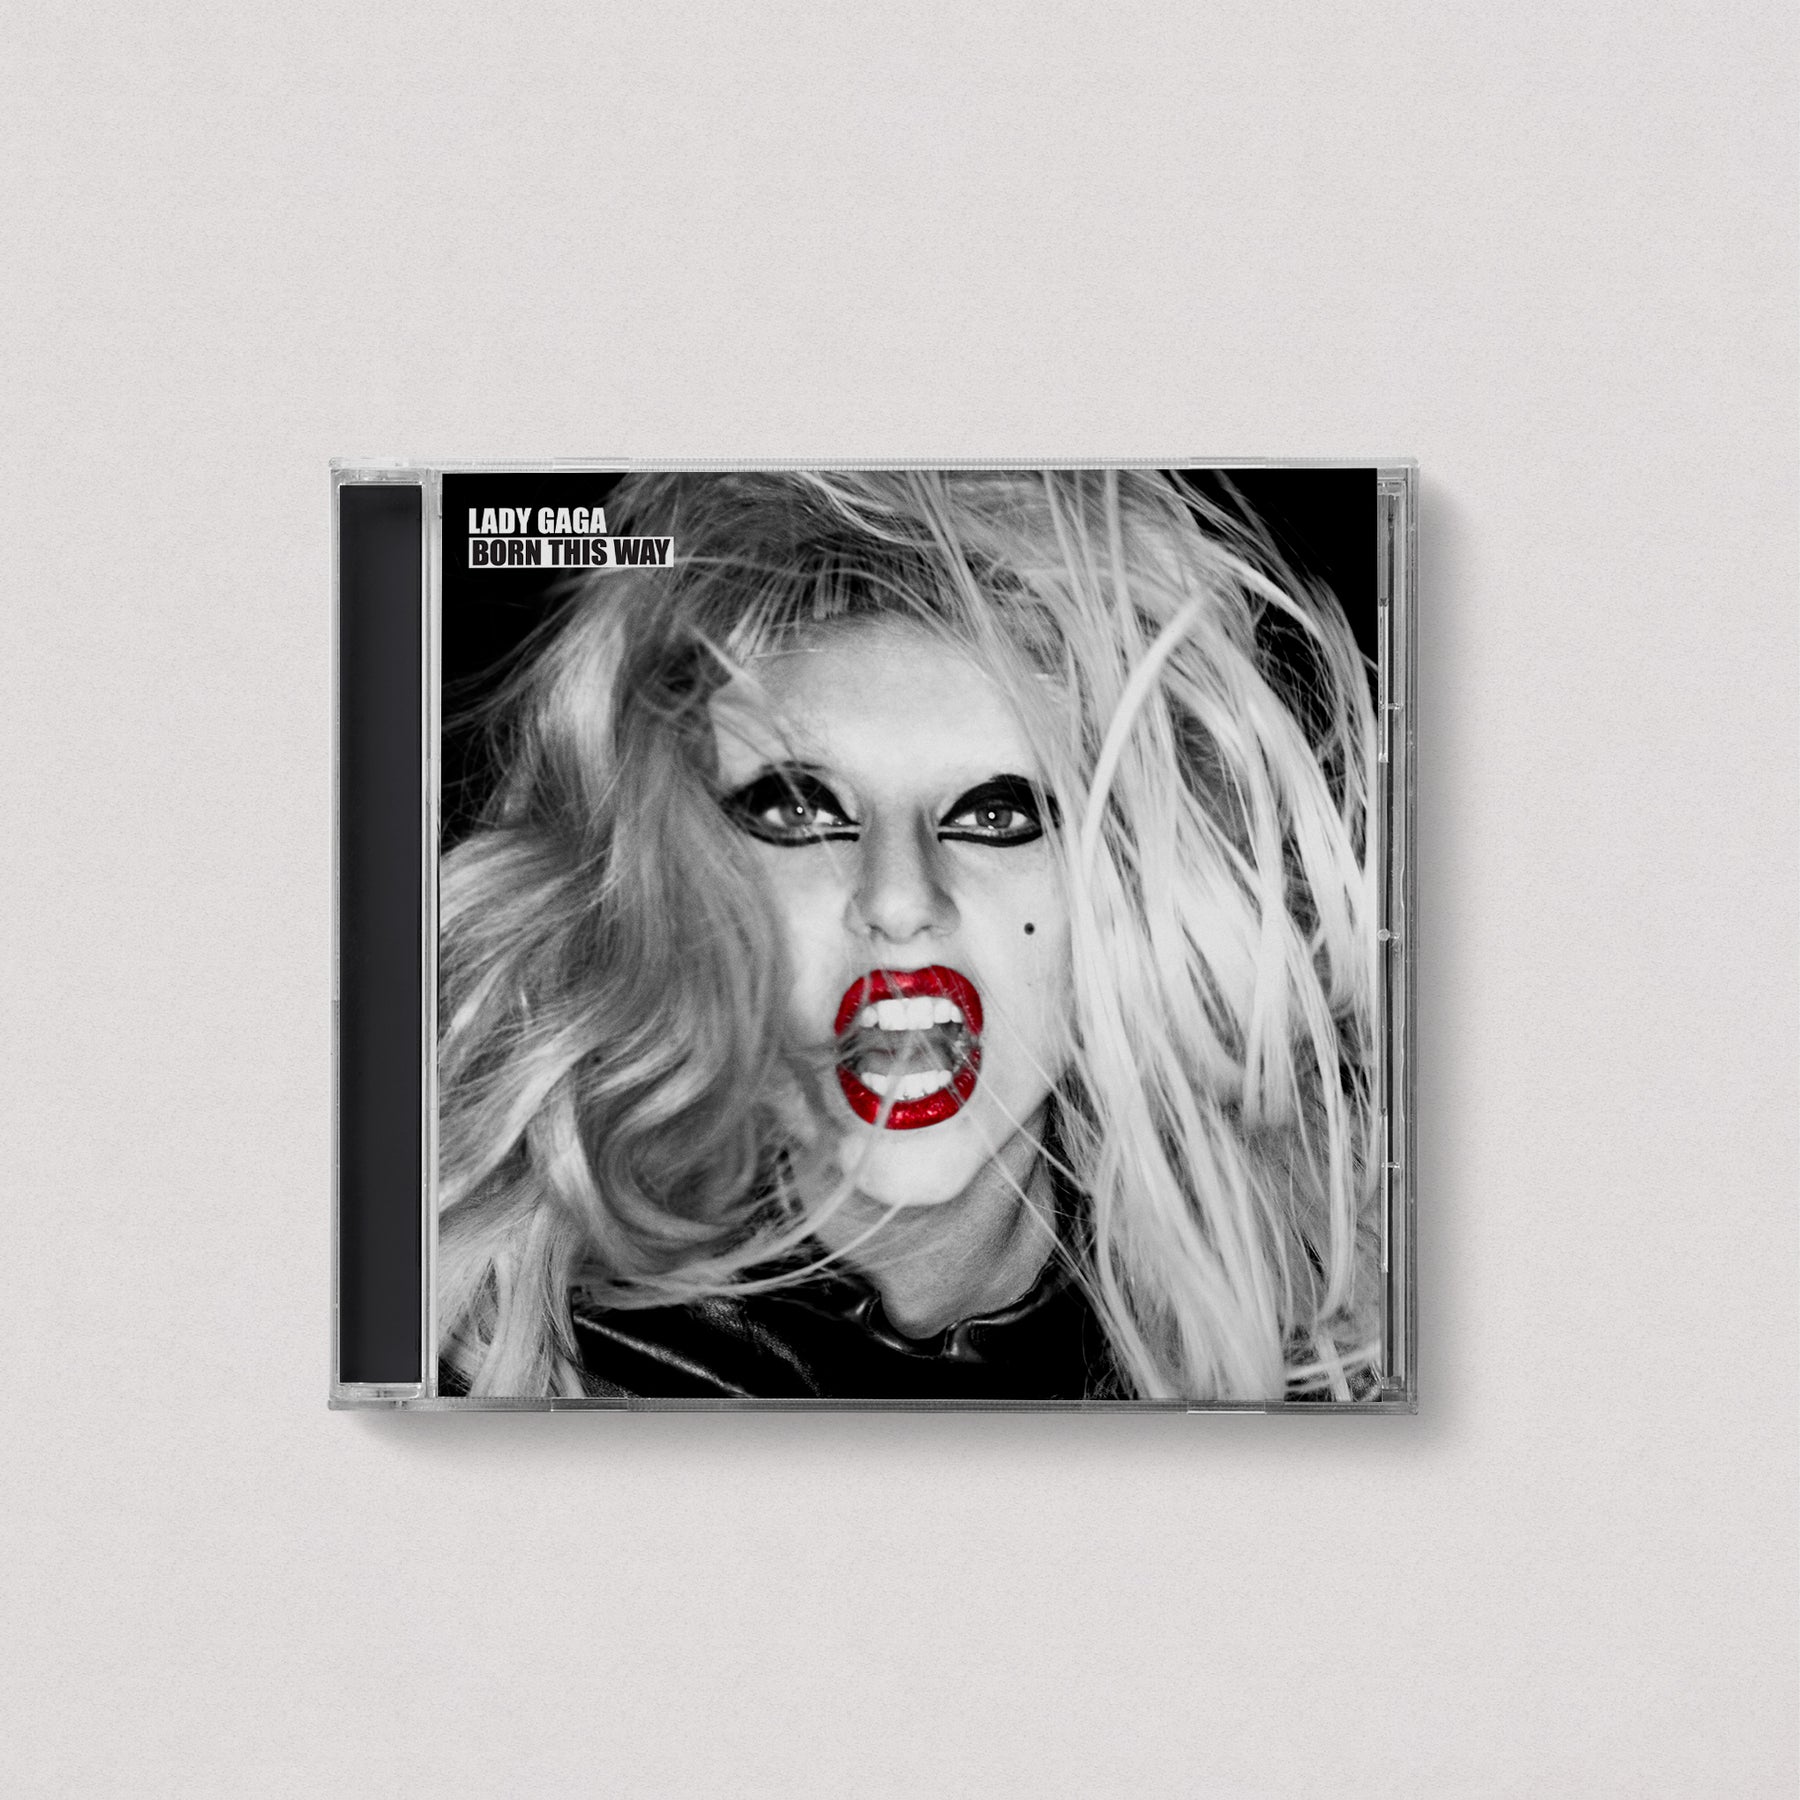 Lady Gaga - Born This Way (Special Edition, 2CD)